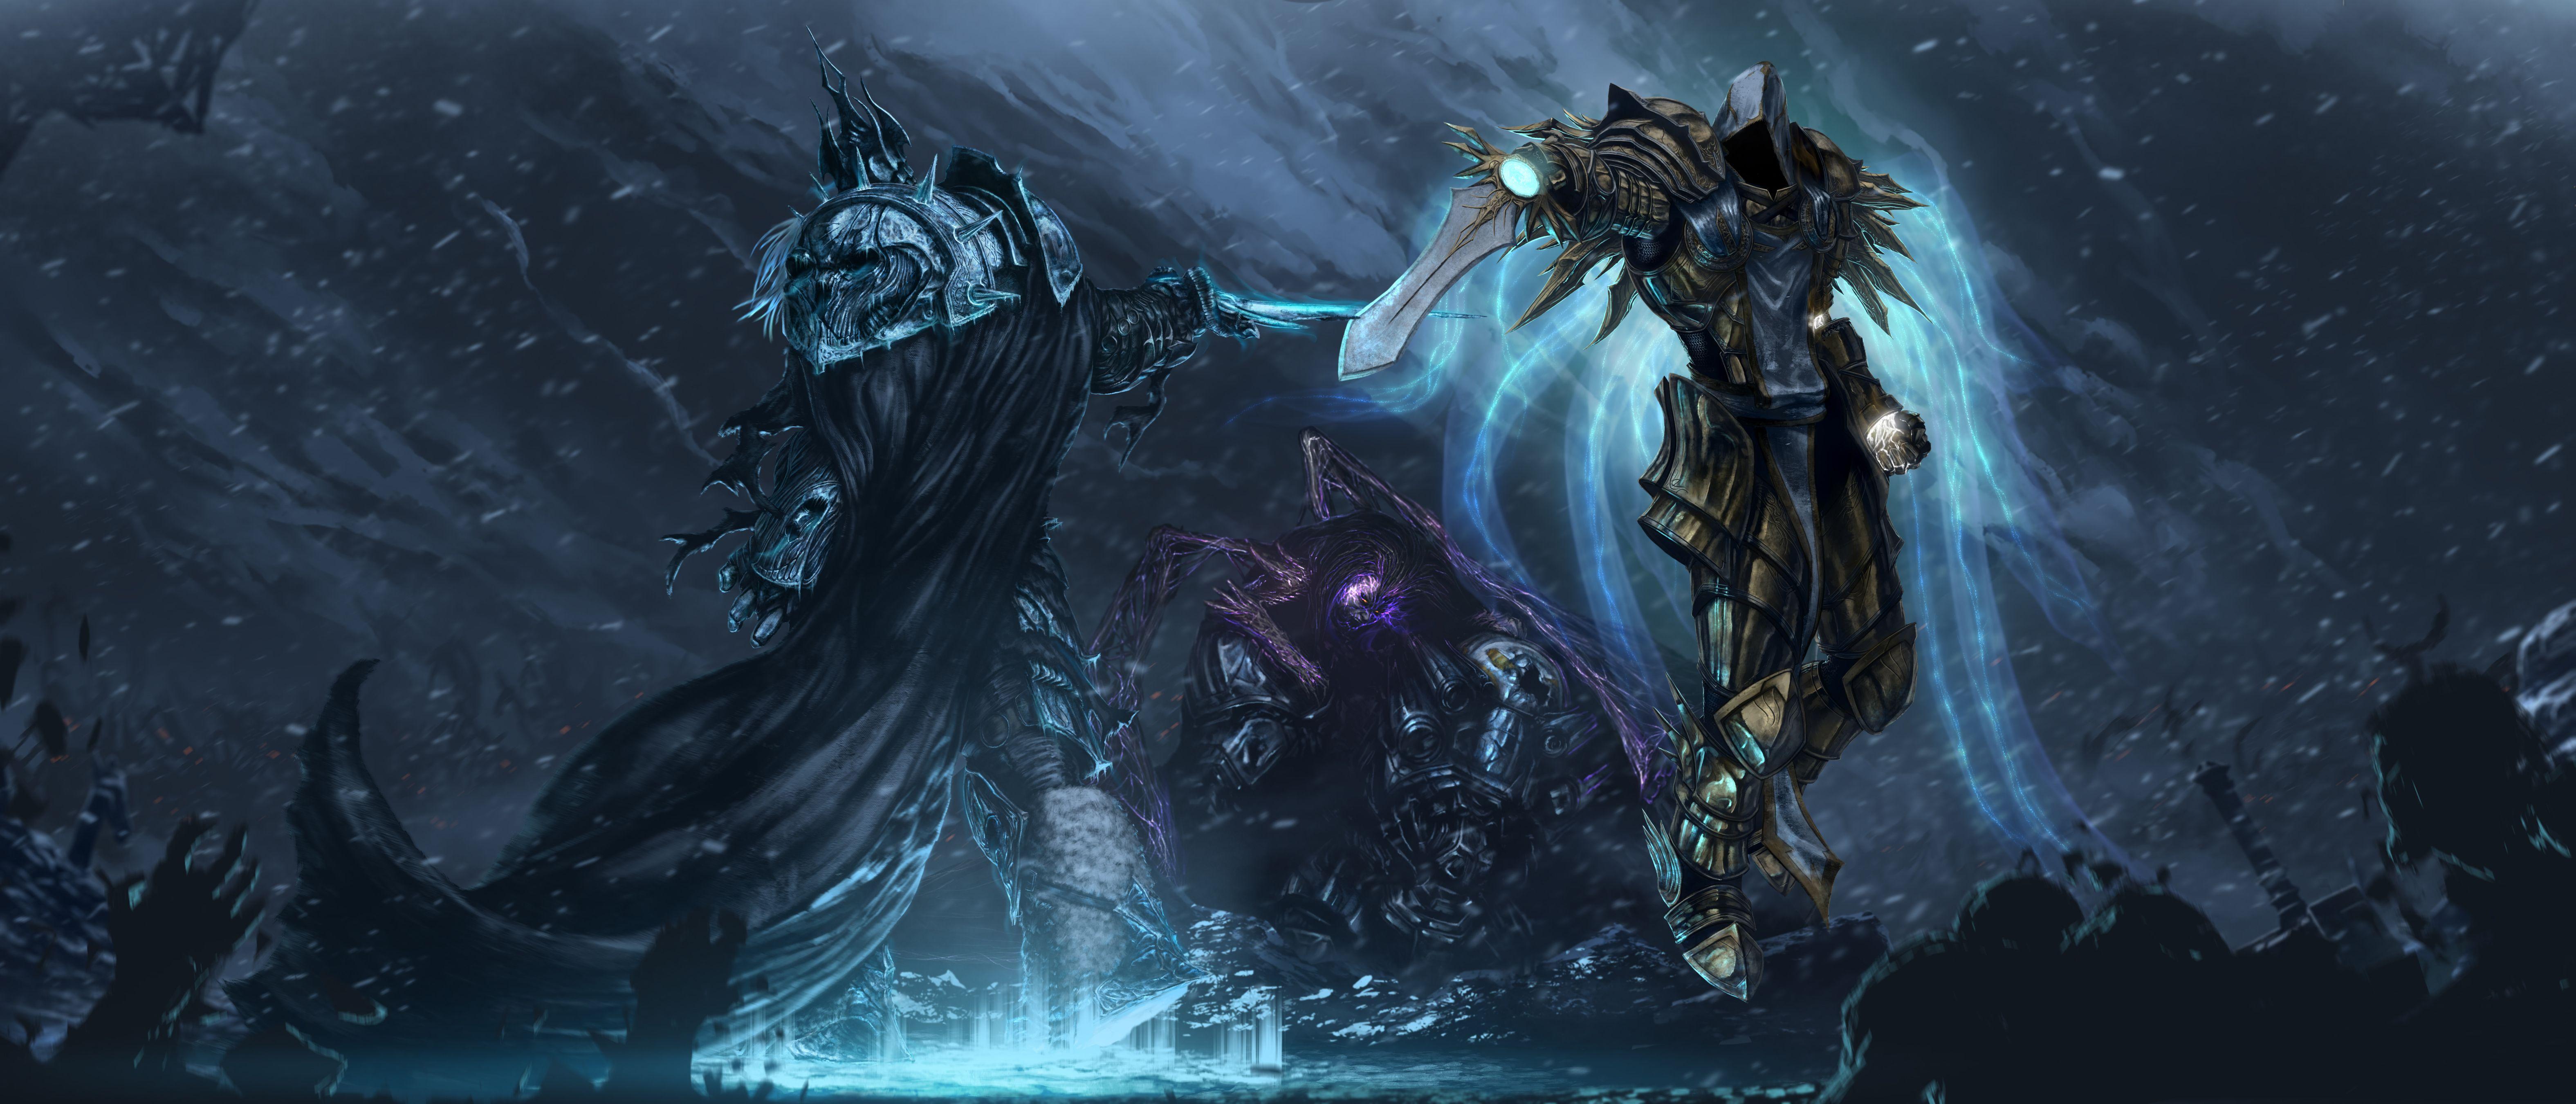 Tyrael (Diablo III) HD Wallpaper and Background Image